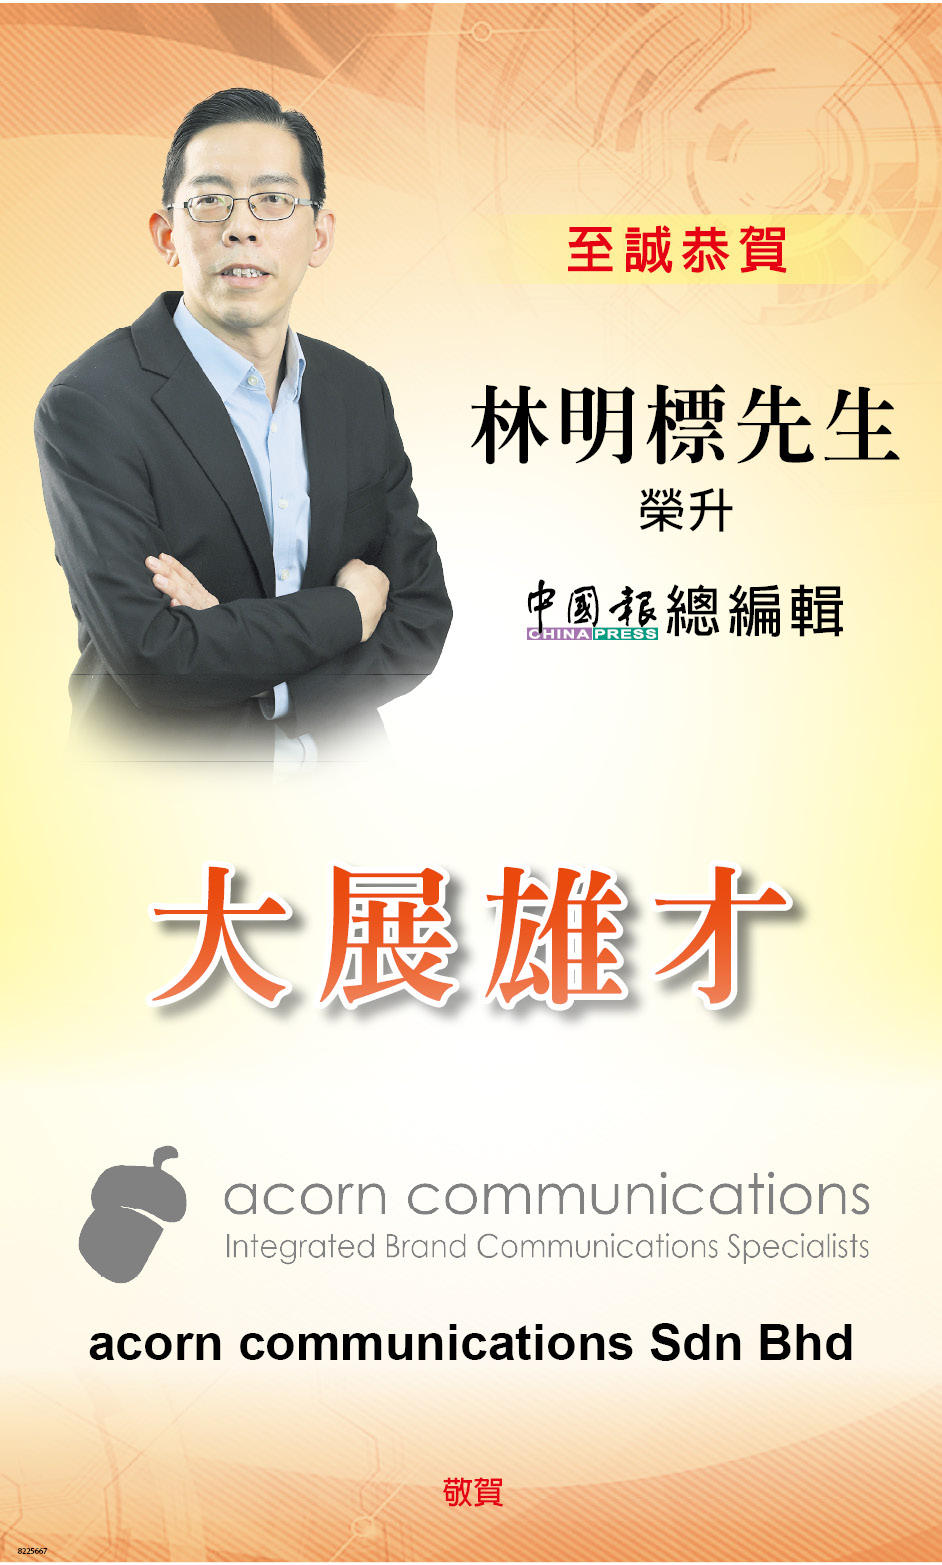 acorn communications Sdn Bhd 全体同仁 恭贺林明标先生 荣升中国报总编辑志庆